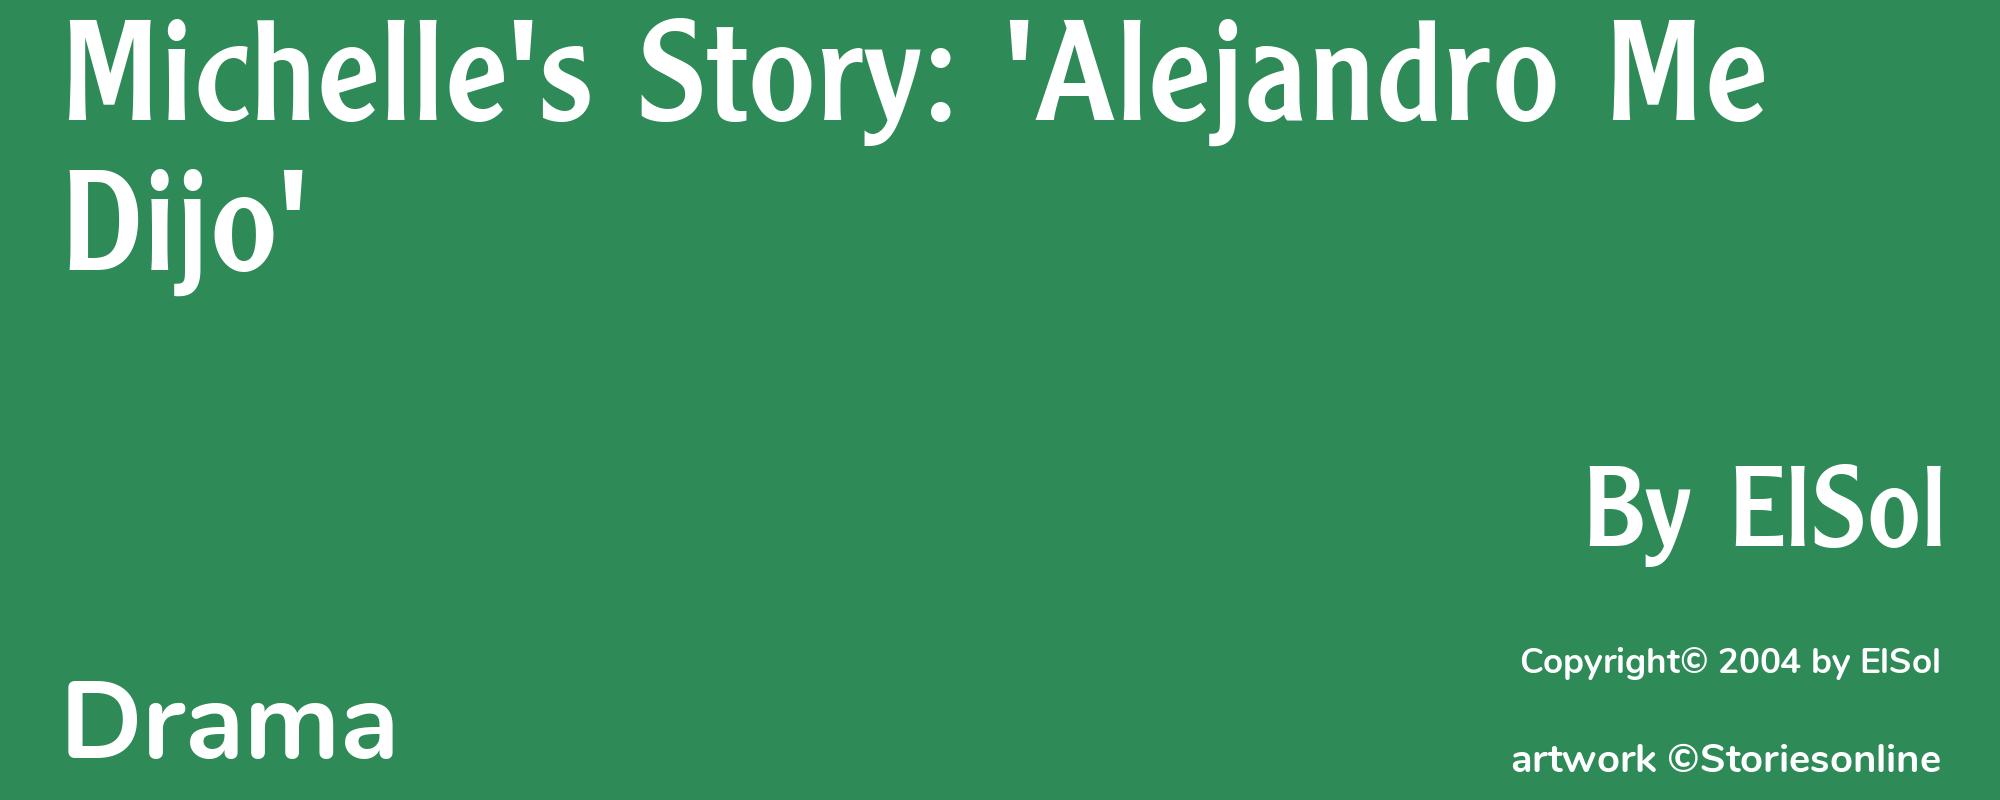 Michelle's Story: 'Alejandro Me Dijo' - Cover